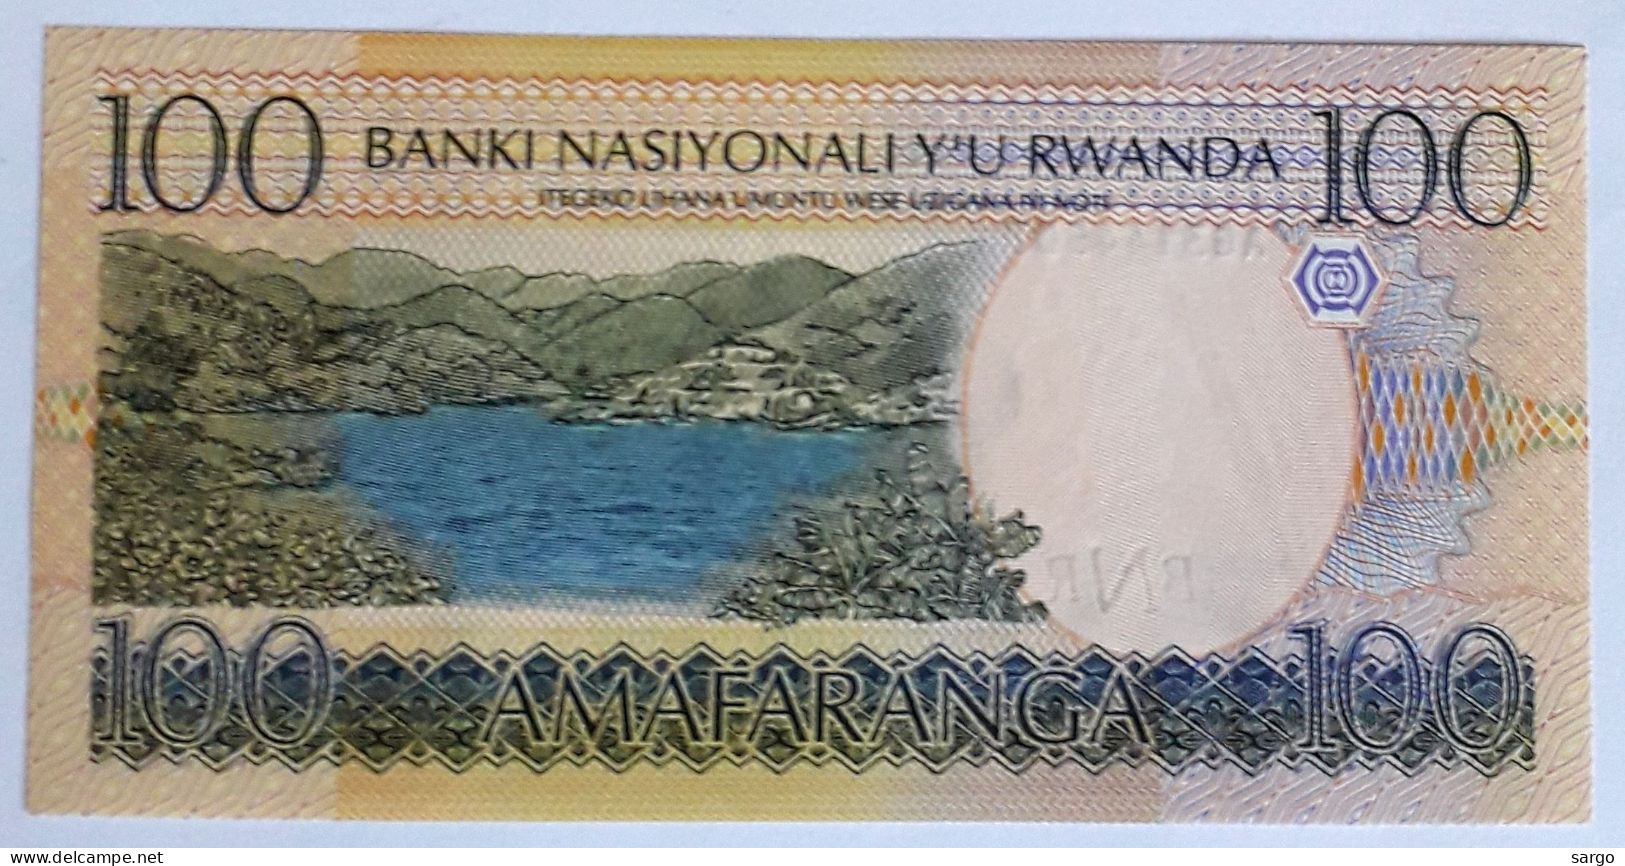 RWANDA - 100 FRANCS - 2003 - UNC - P 29A - BANKNOTES - PAPER MONEY - CARTAMONETA - - Ruanda